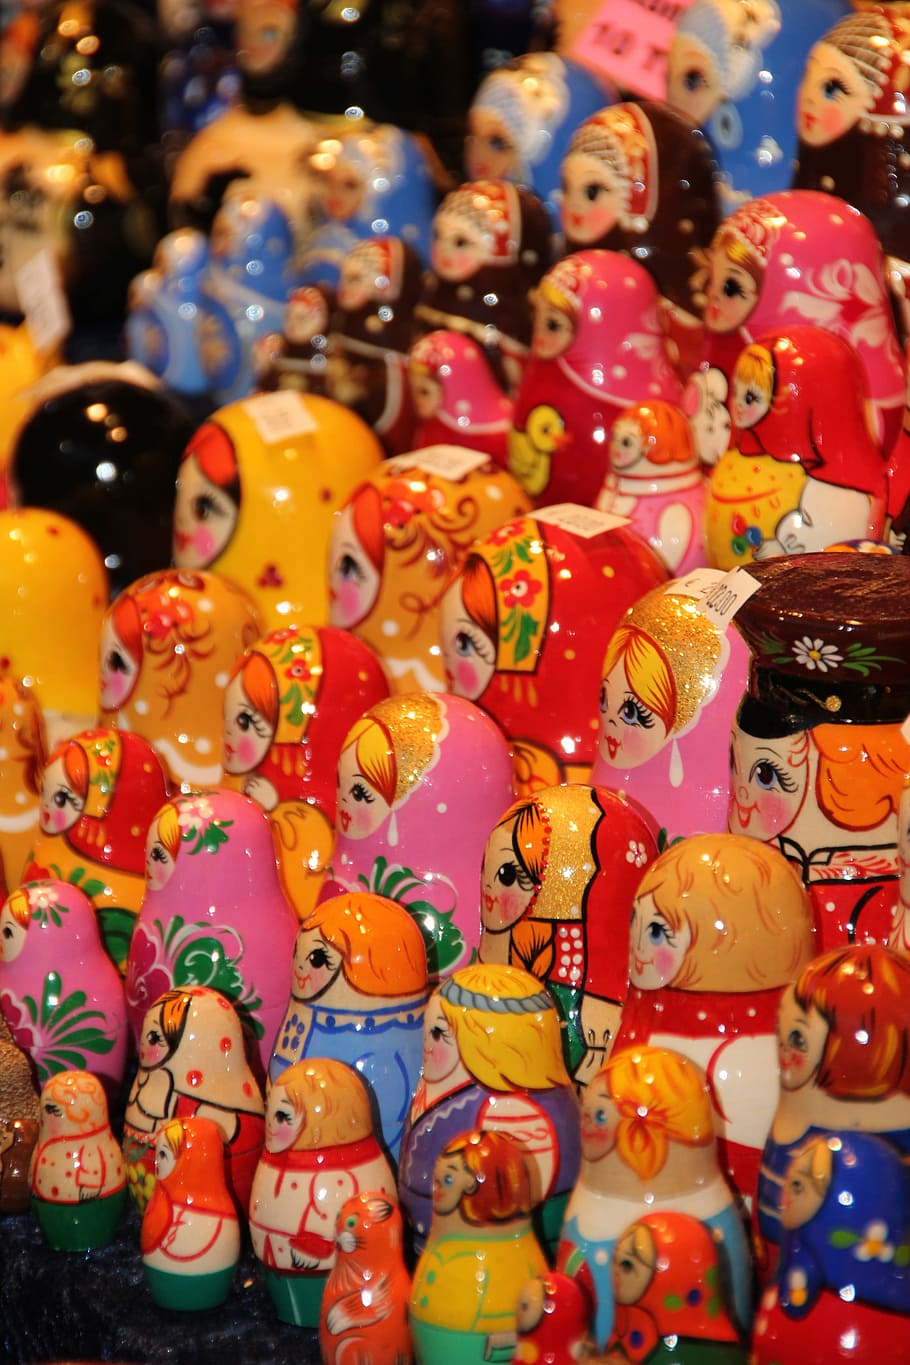 Christmas Market, Christmas Decorations, figures, wooden figures